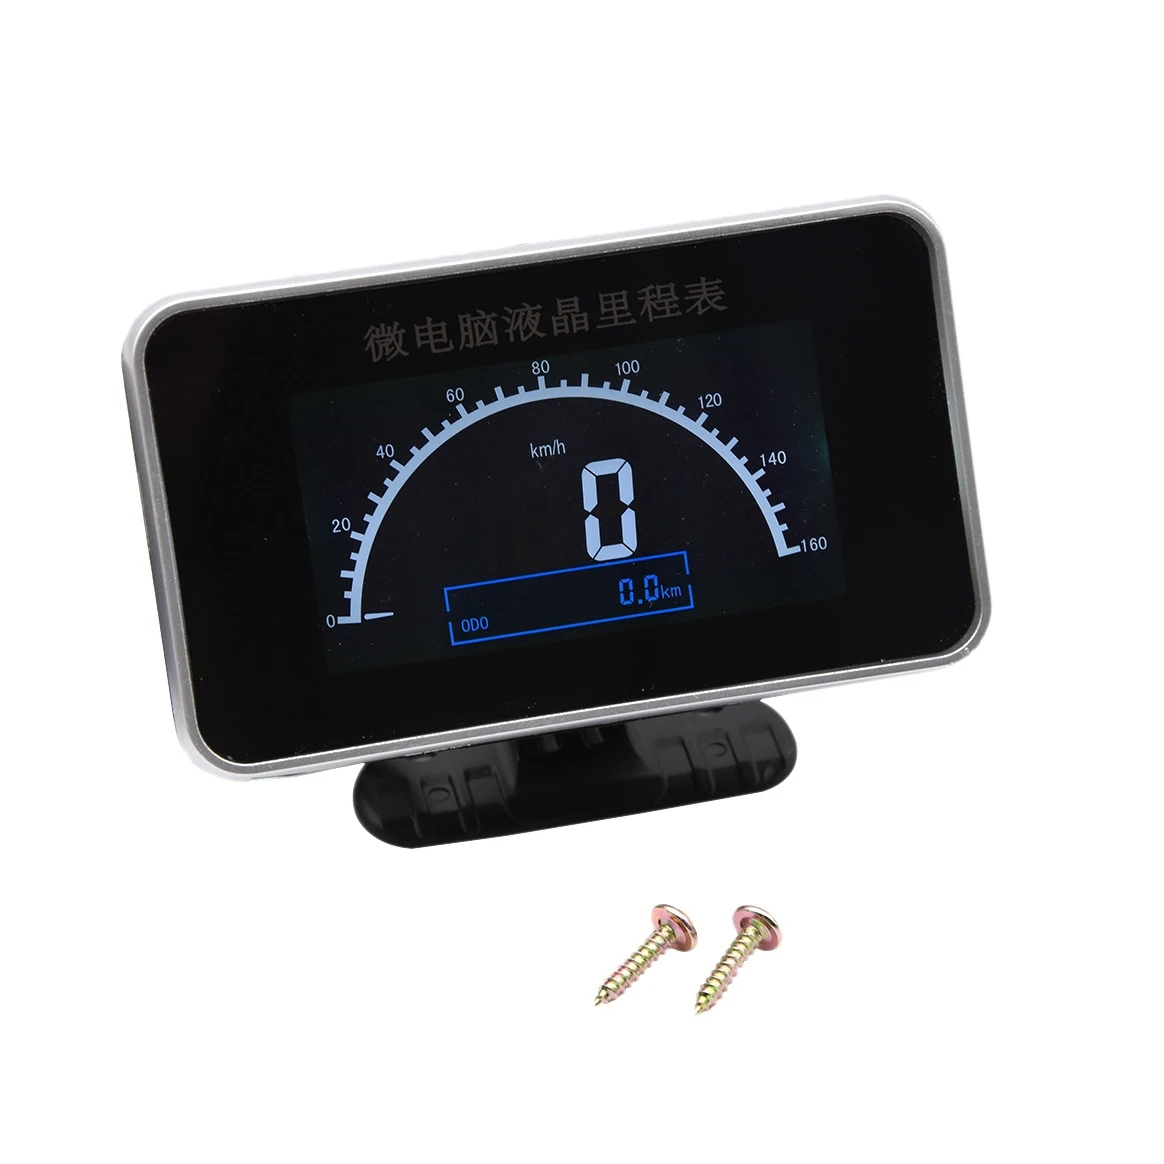 

Car Truck 12V/24V 2 IN 1 Functions Digital Speedometer Speed Meter+Odometer Gauge LCD Instrument Panel+Alarm LCD